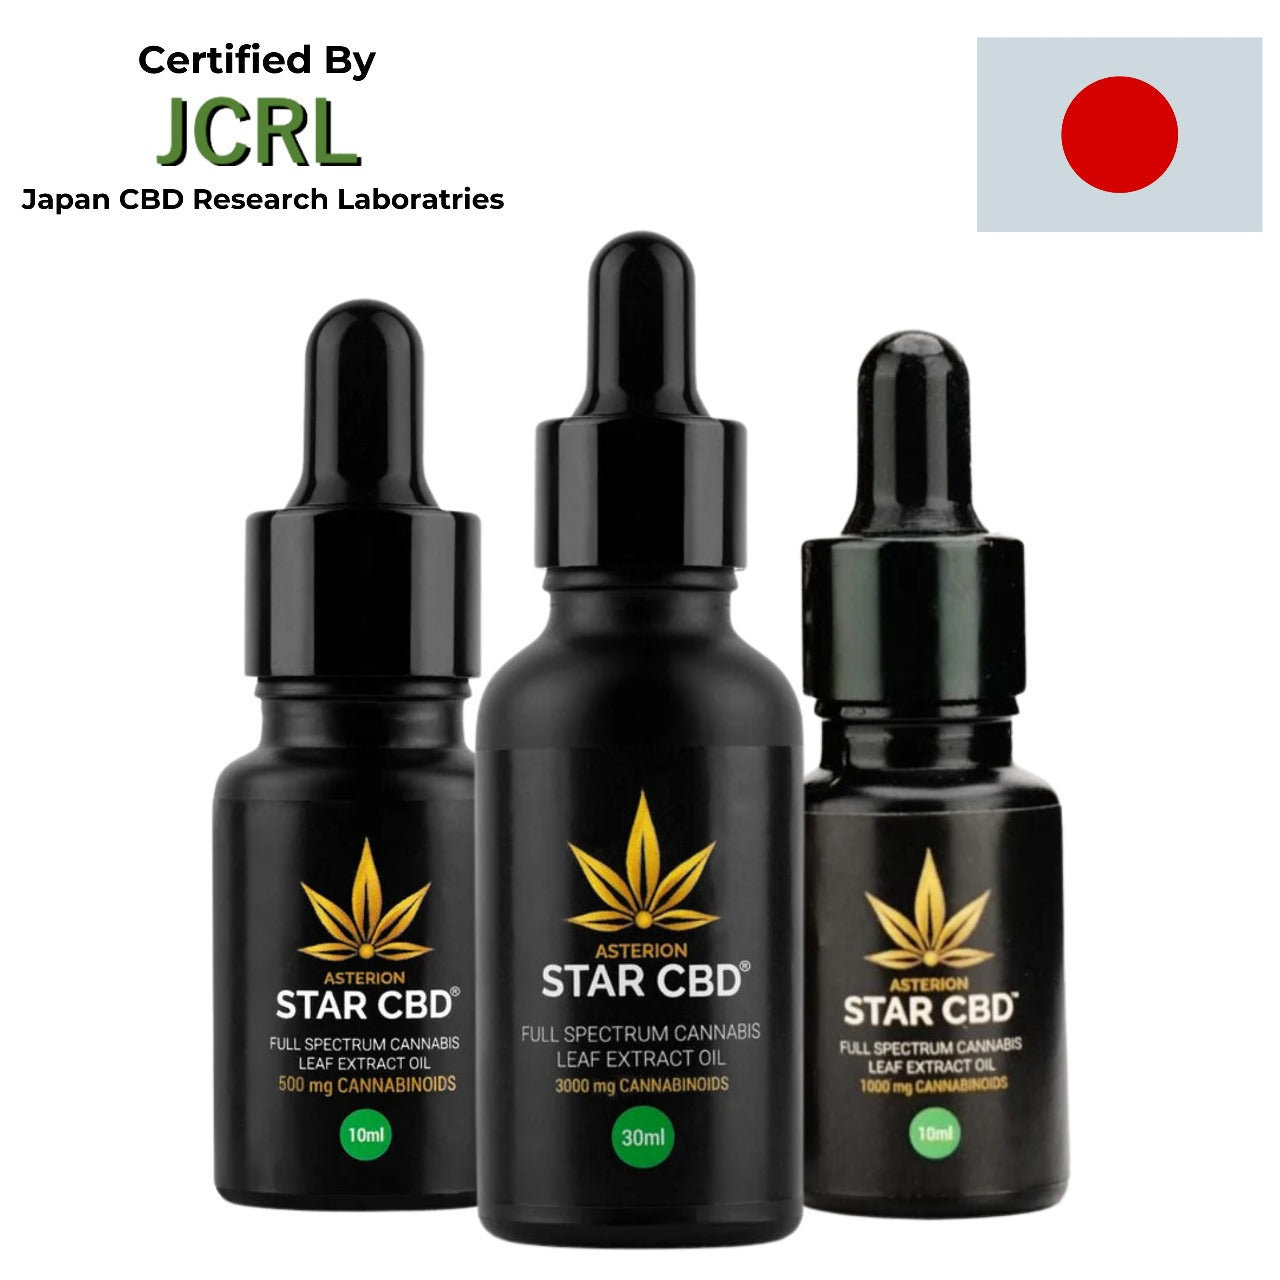 StarCBD Full Spectrum Cannabis Leaf Extract Oil